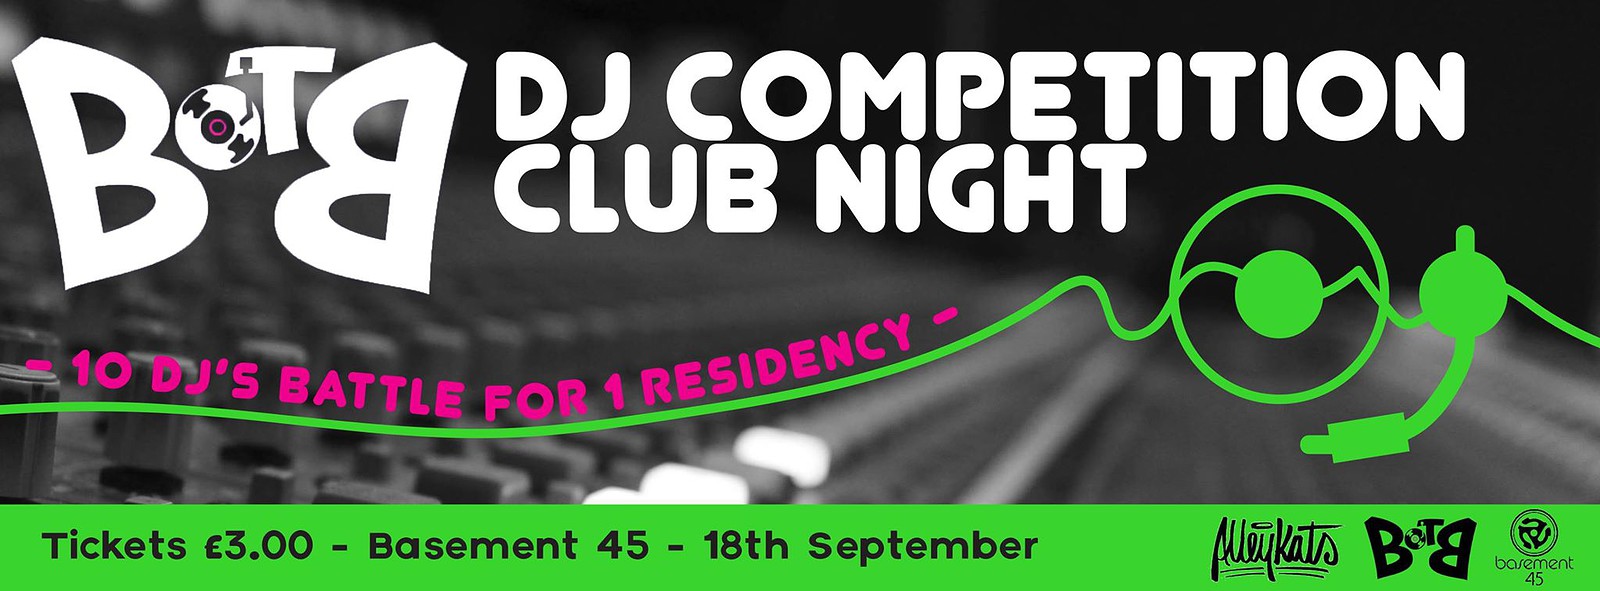 Botb DJ Comp Club Night at Basement 45